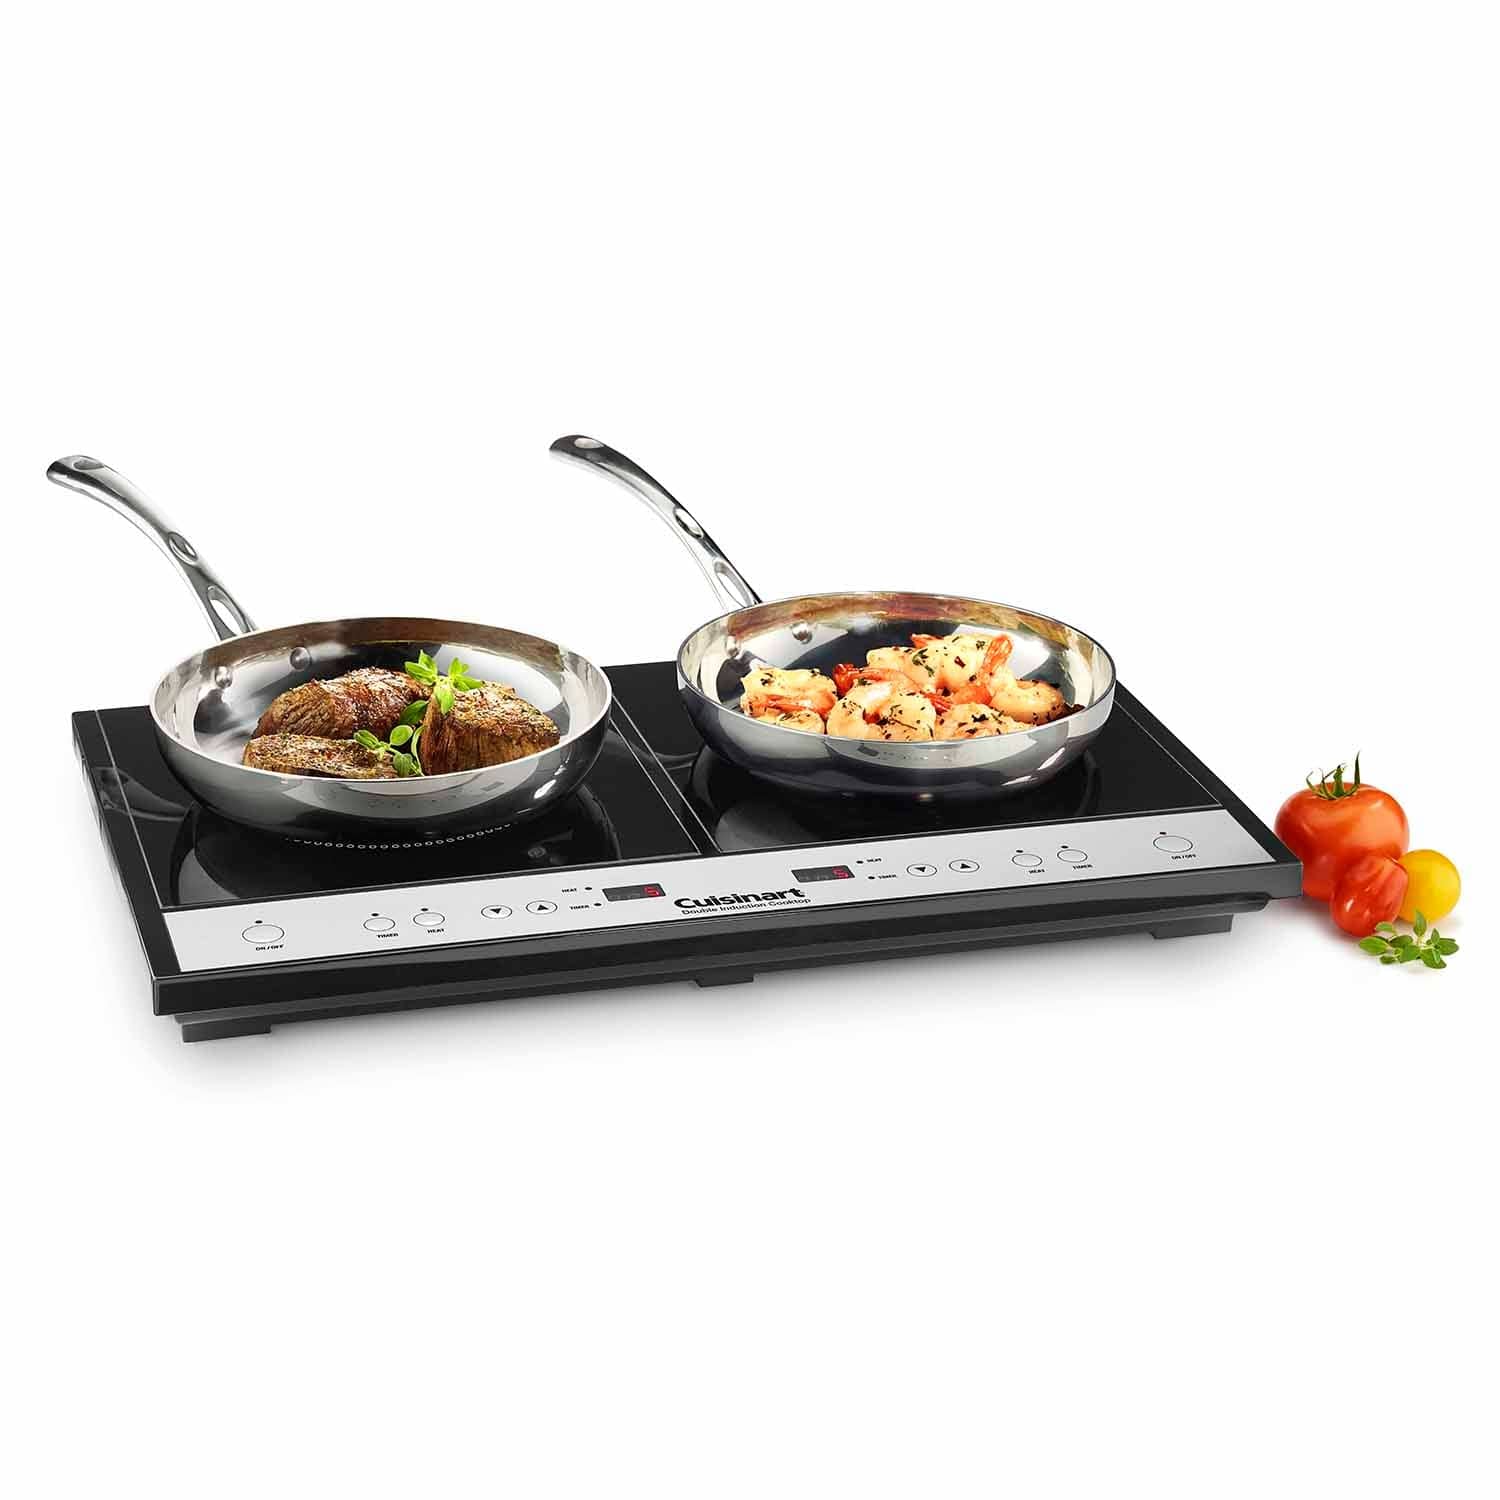 Cuisinart ICT-60FR Double Induction Cooktop, Black - Certified Refurbished